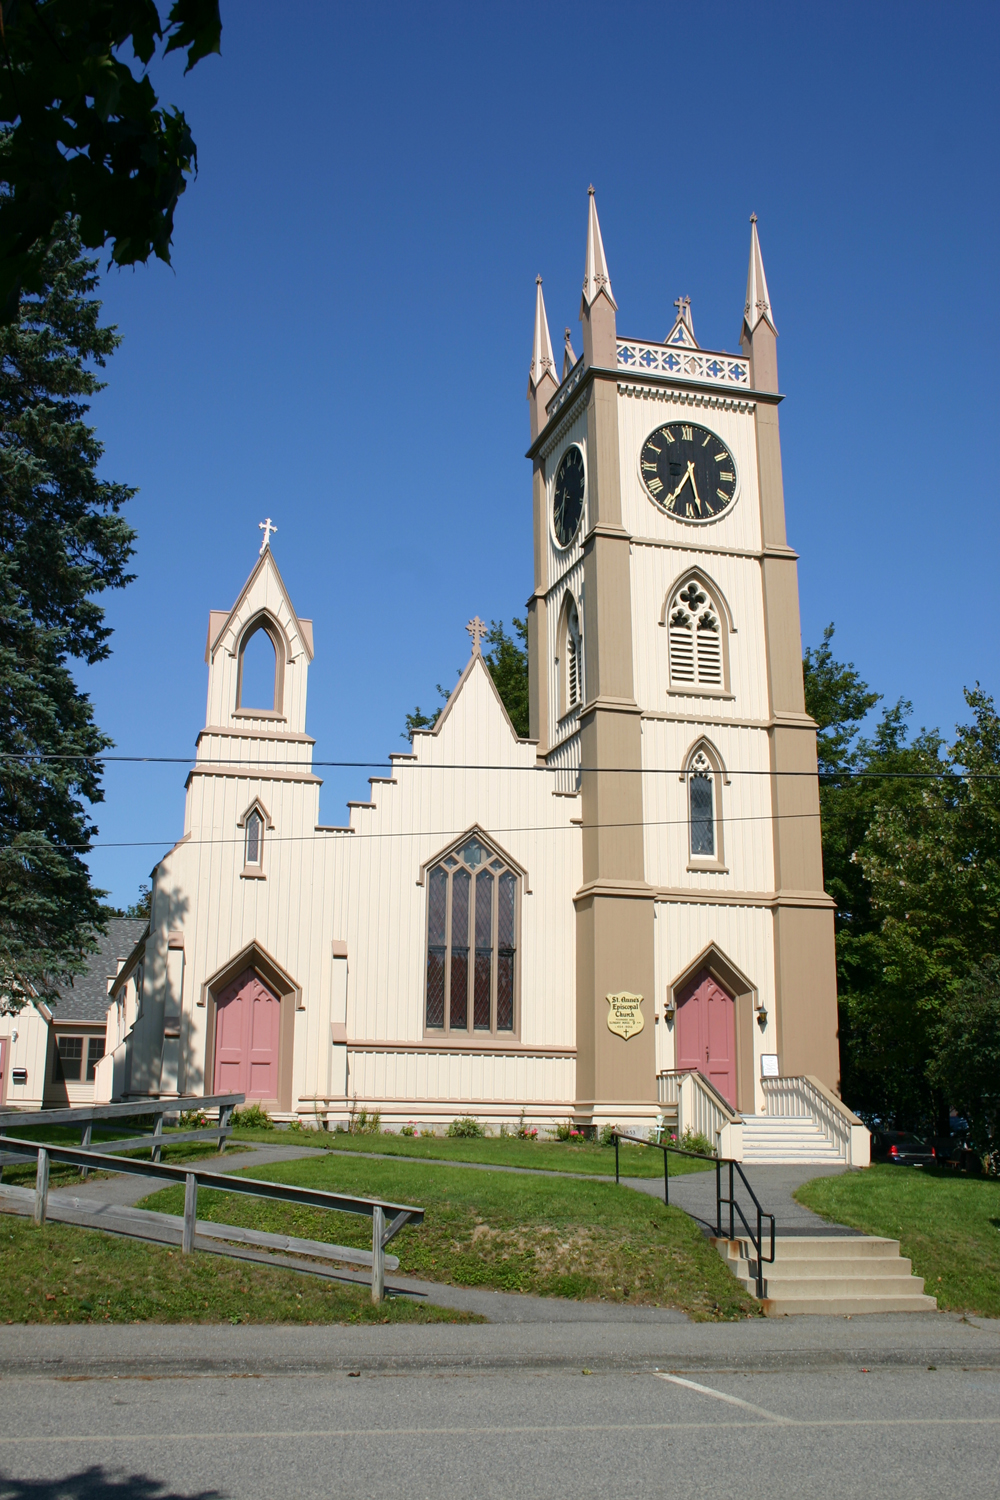 ST. ANNE'S EPISCOPAL CHURCH